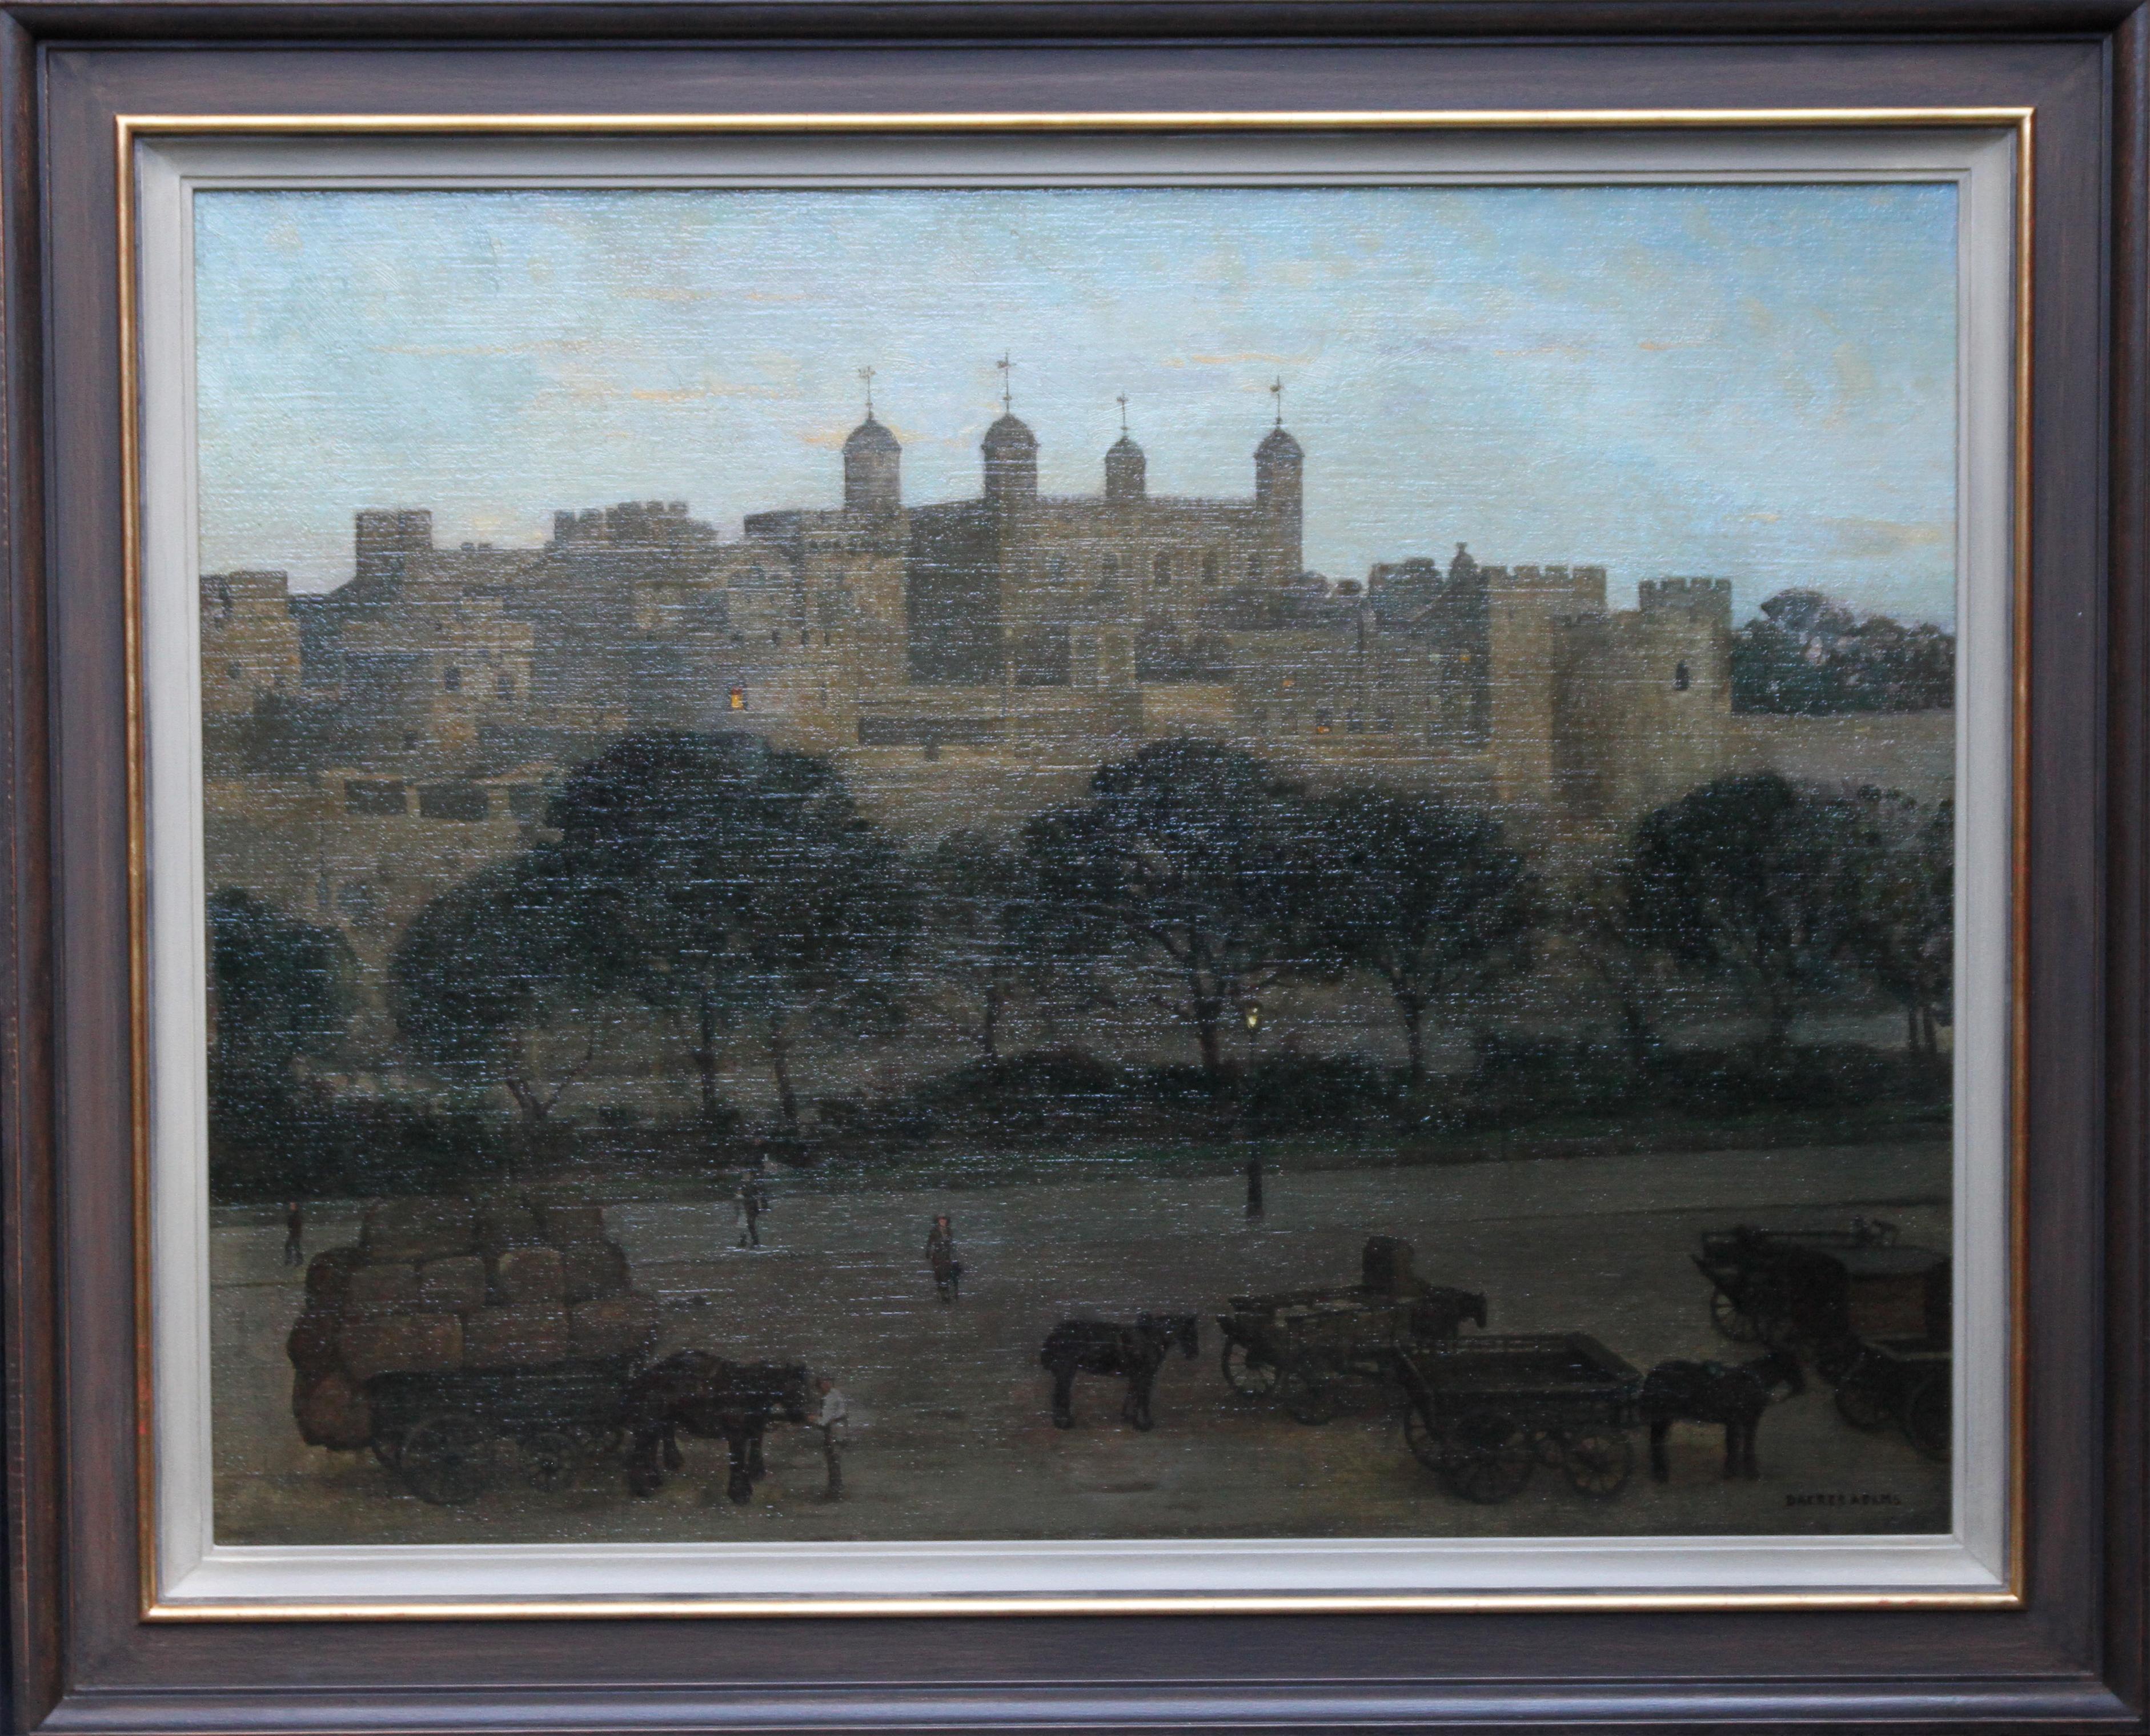 William Dacres Adams Landscape Painting - The Tower of London - British 20's art nocturne city landscape oil painting